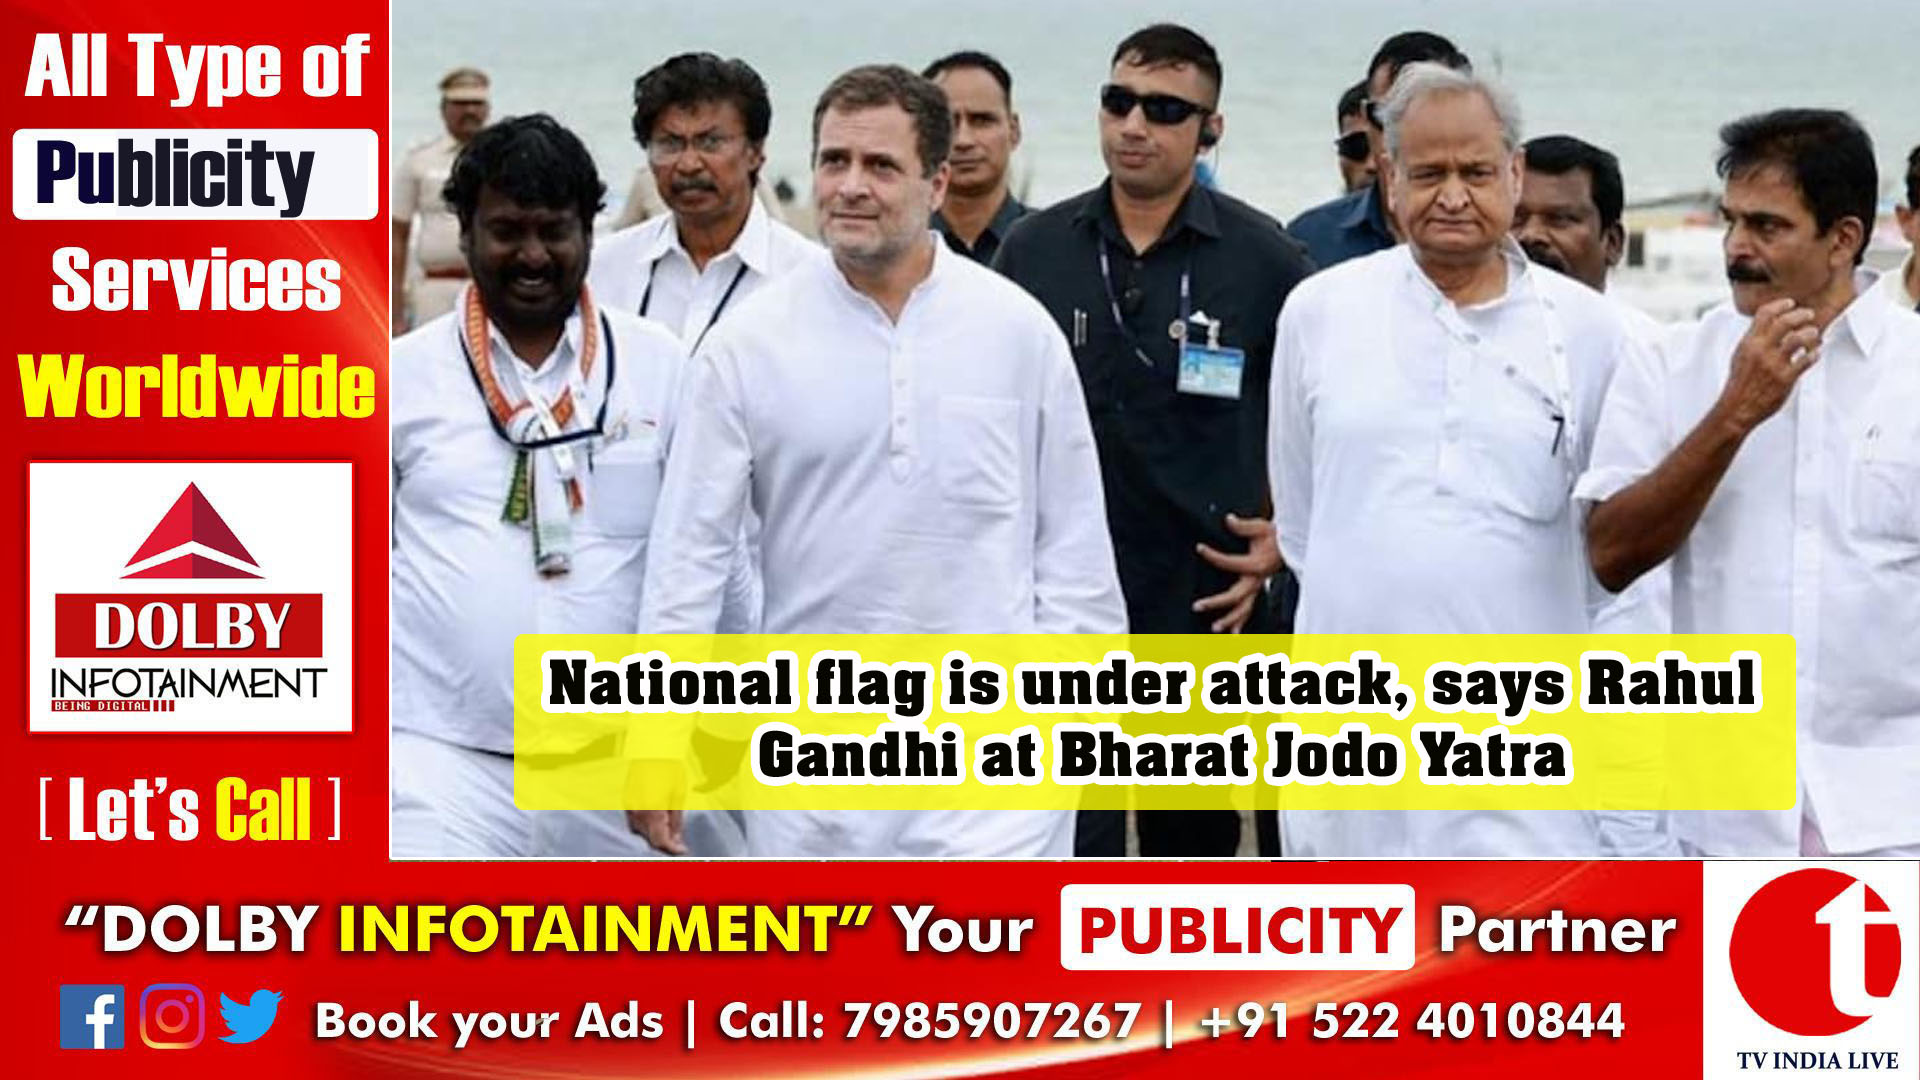 National flag is under attack, says Rahul Gandhi at Bharat Jodo Yatra